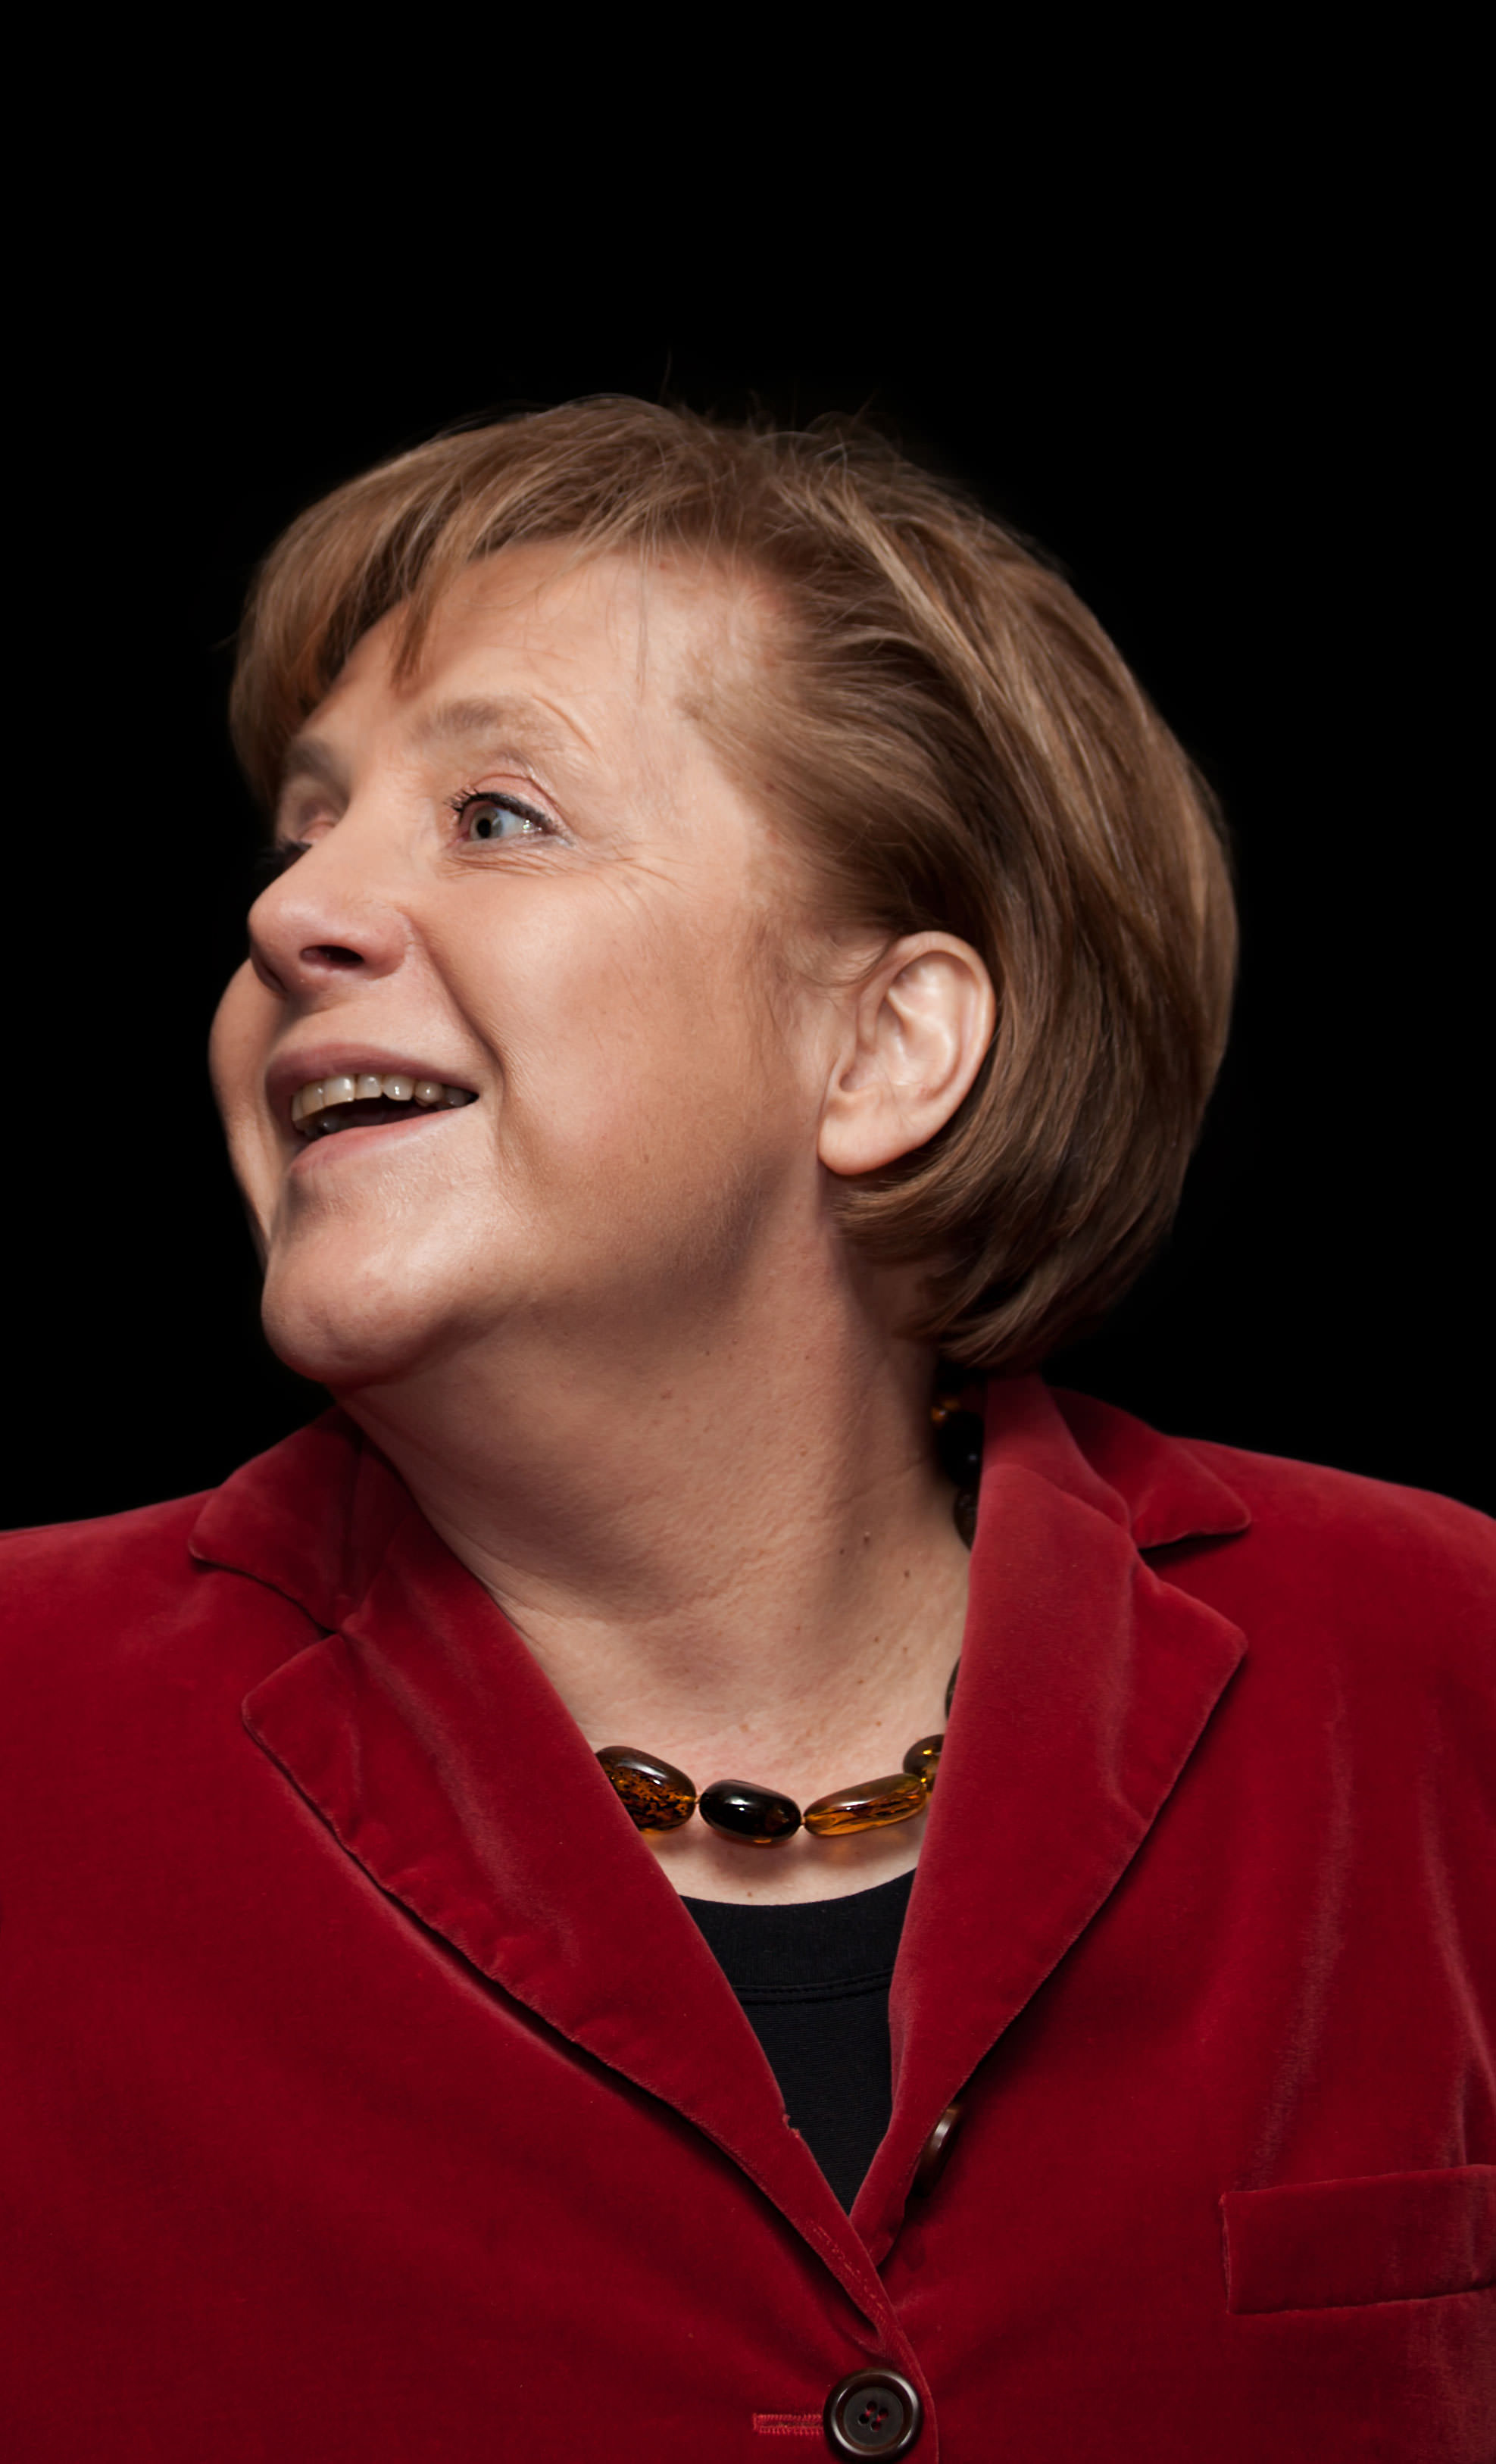 Angela Merkel by Christoph Braun, Wikimedia Commons